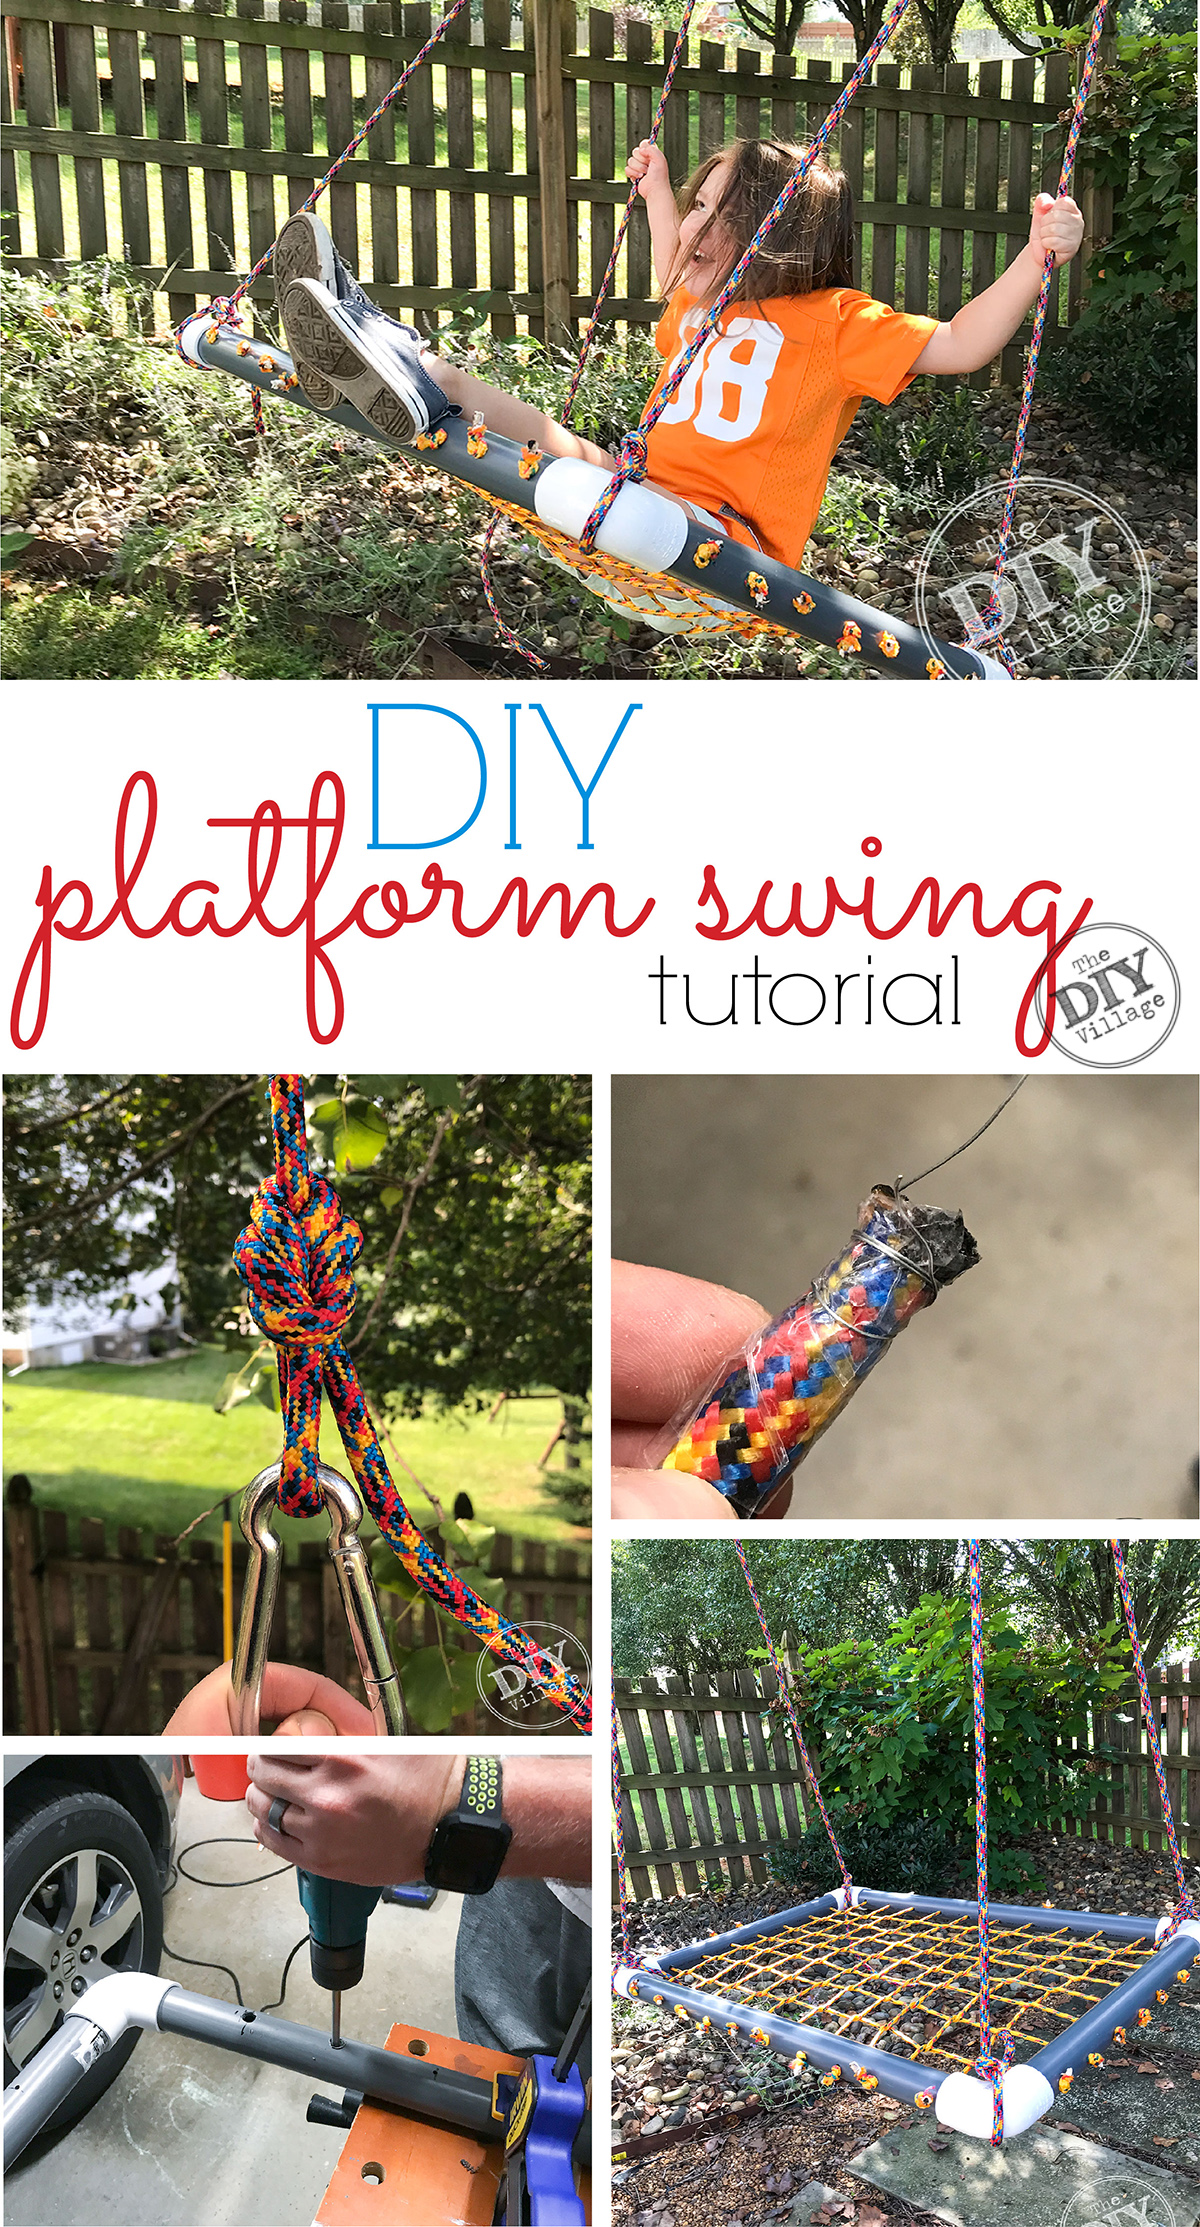 Perfect for kids - DIY platform swing tutorial. #diyswing #platformswing #sensoryswing #outdoor #ropeswing #tutorial #diy  #powertoolchallenge